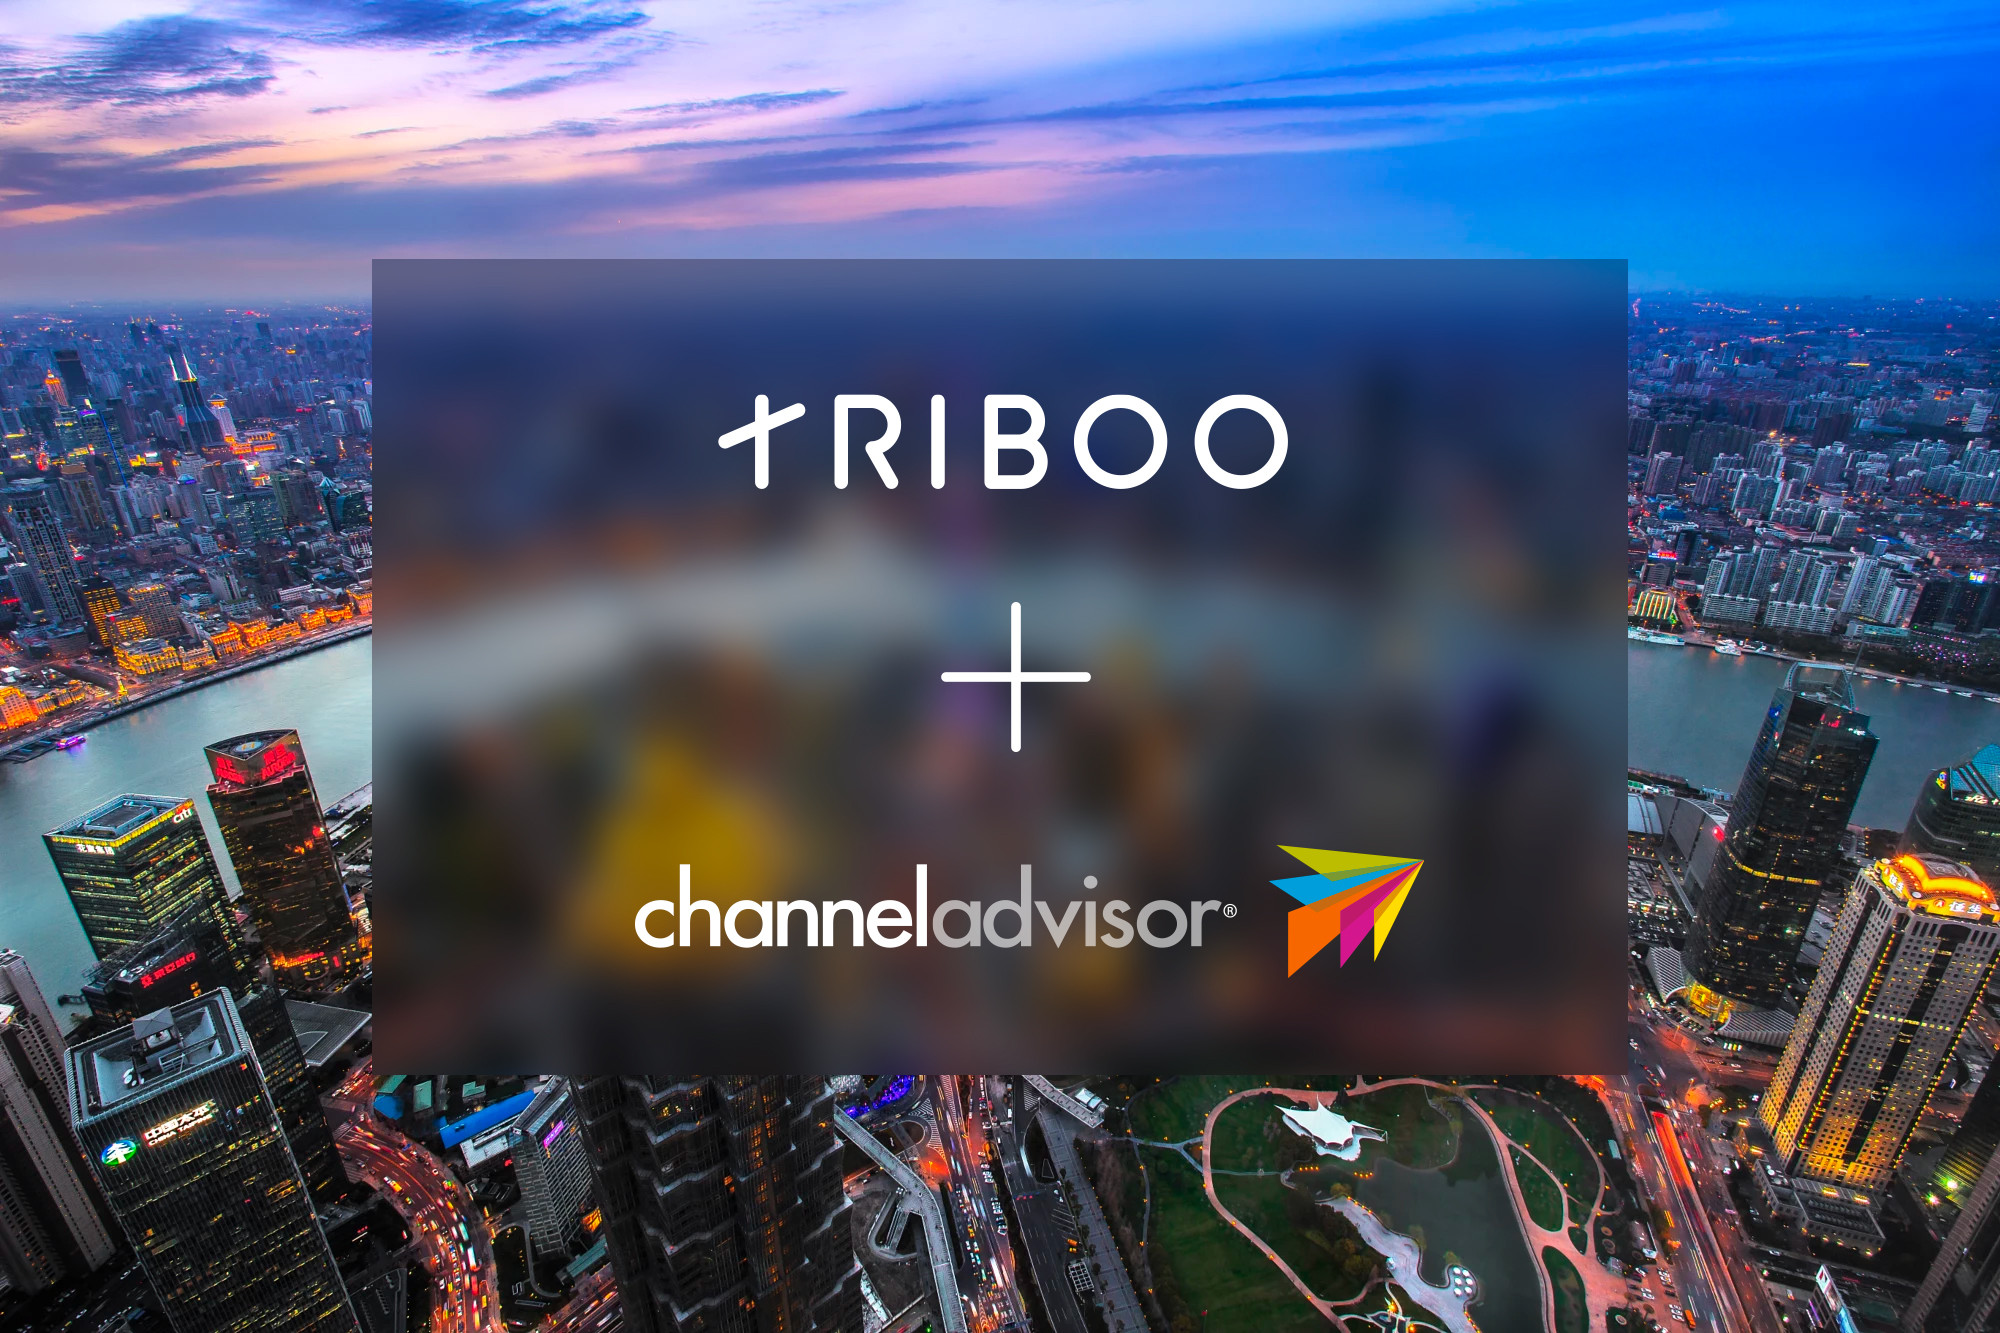 Triboo e ChannelAdvisor in partnernship dedicata a ecommerce e marketplace